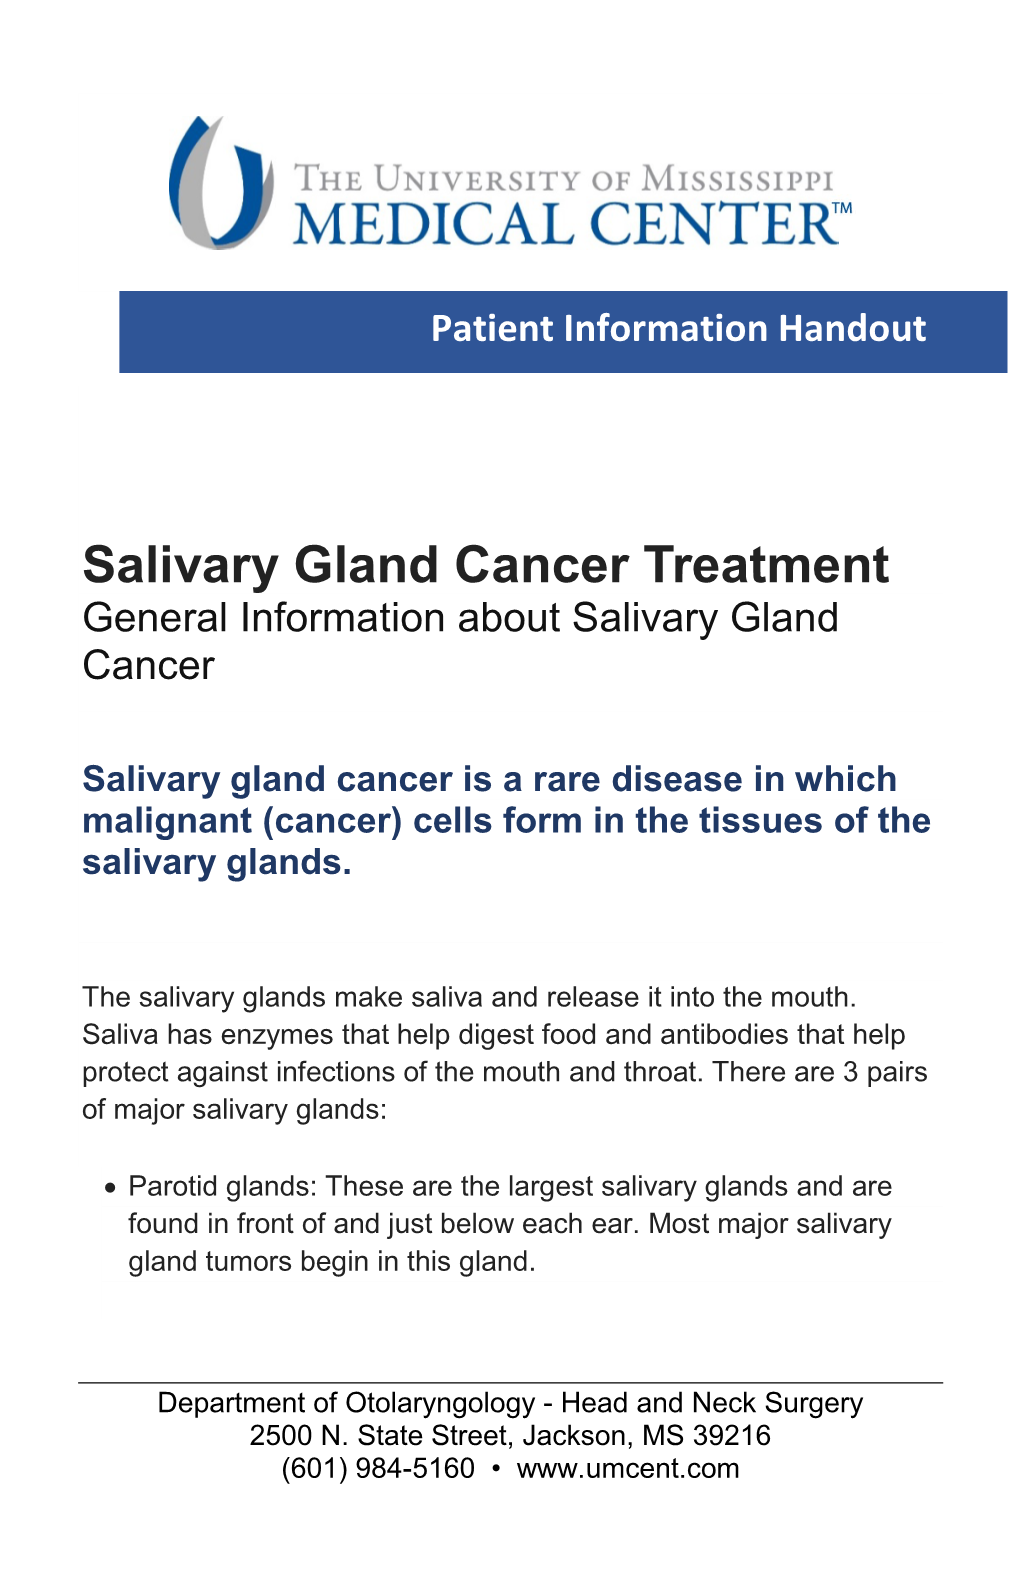 Salivary Gland Cancer Treatment General Information About Salivary Gland Cancer